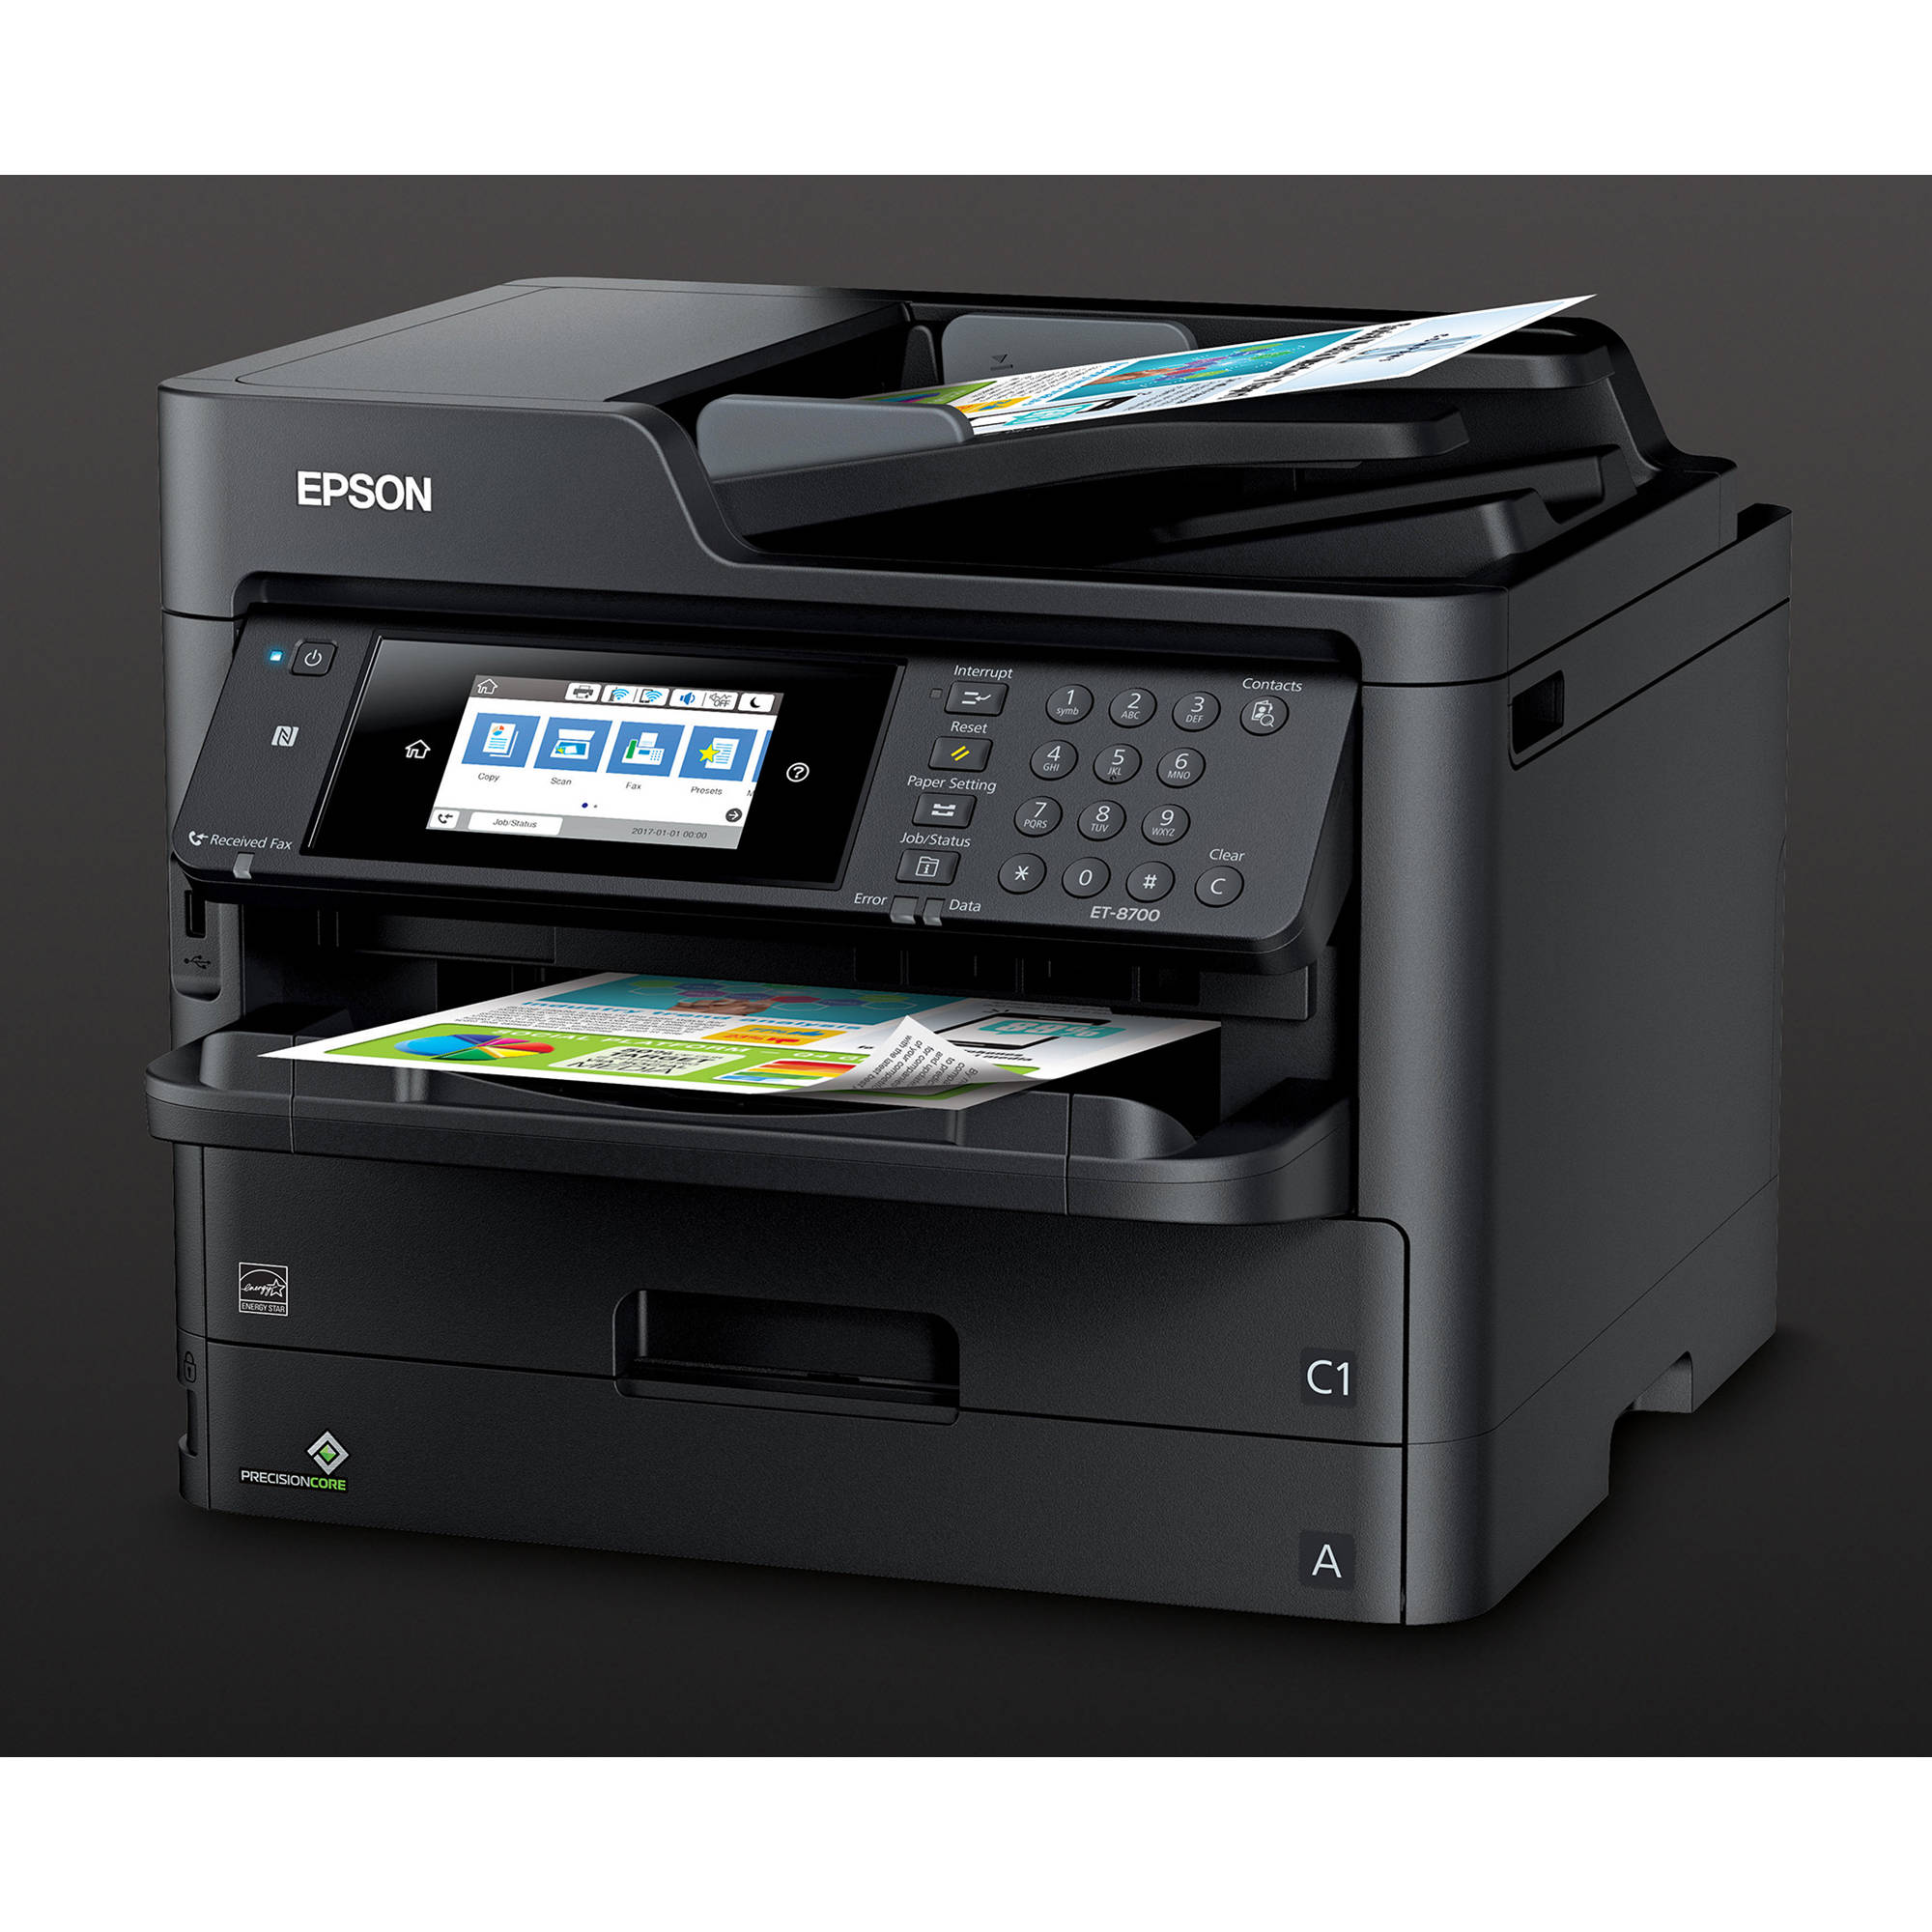 Epson Et 8700 Printer Driver - Printer Review Epson ...